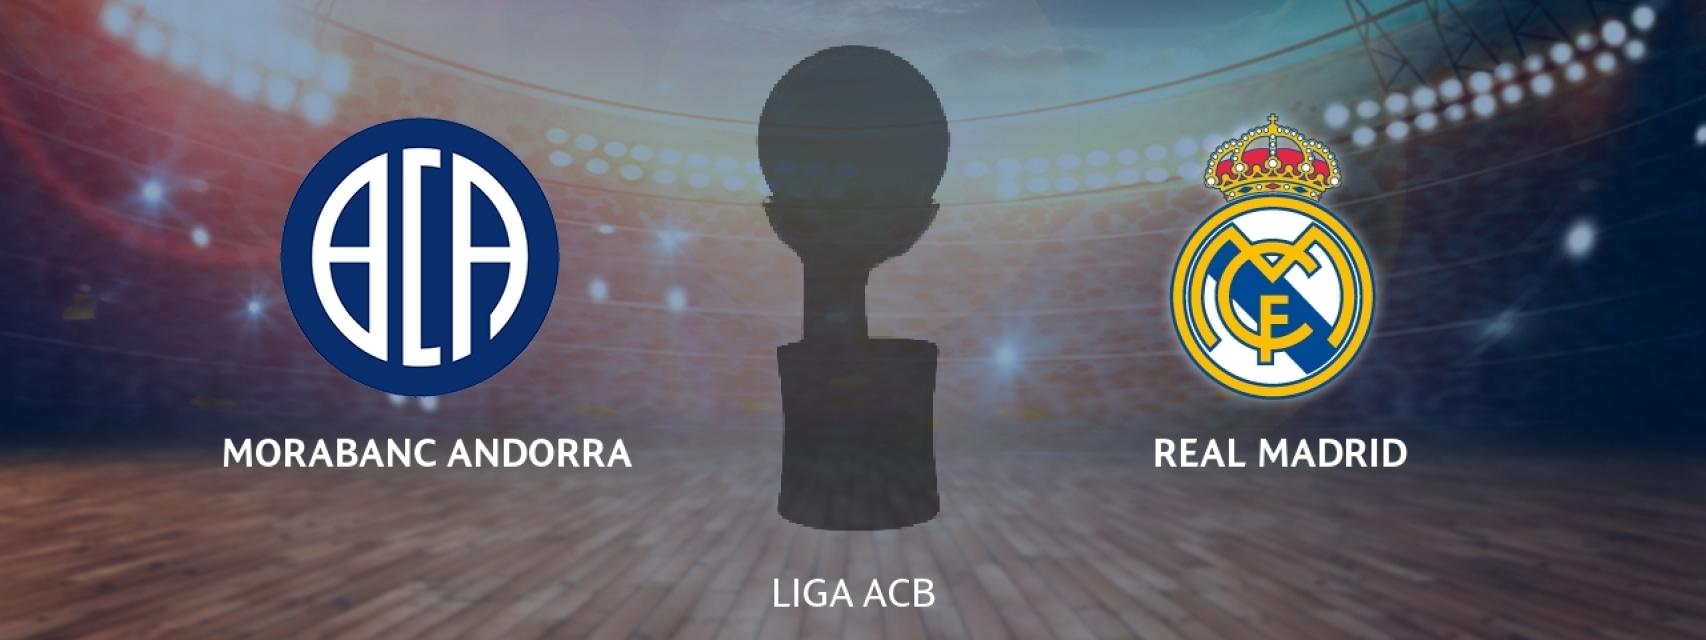 MoraBanc Andorra - Real Madrid